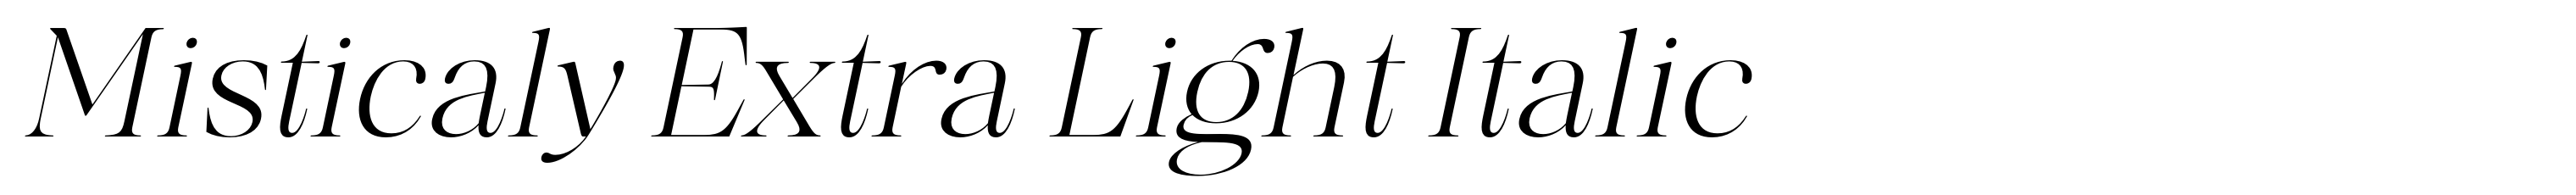 Misticaly Extra Light Italic